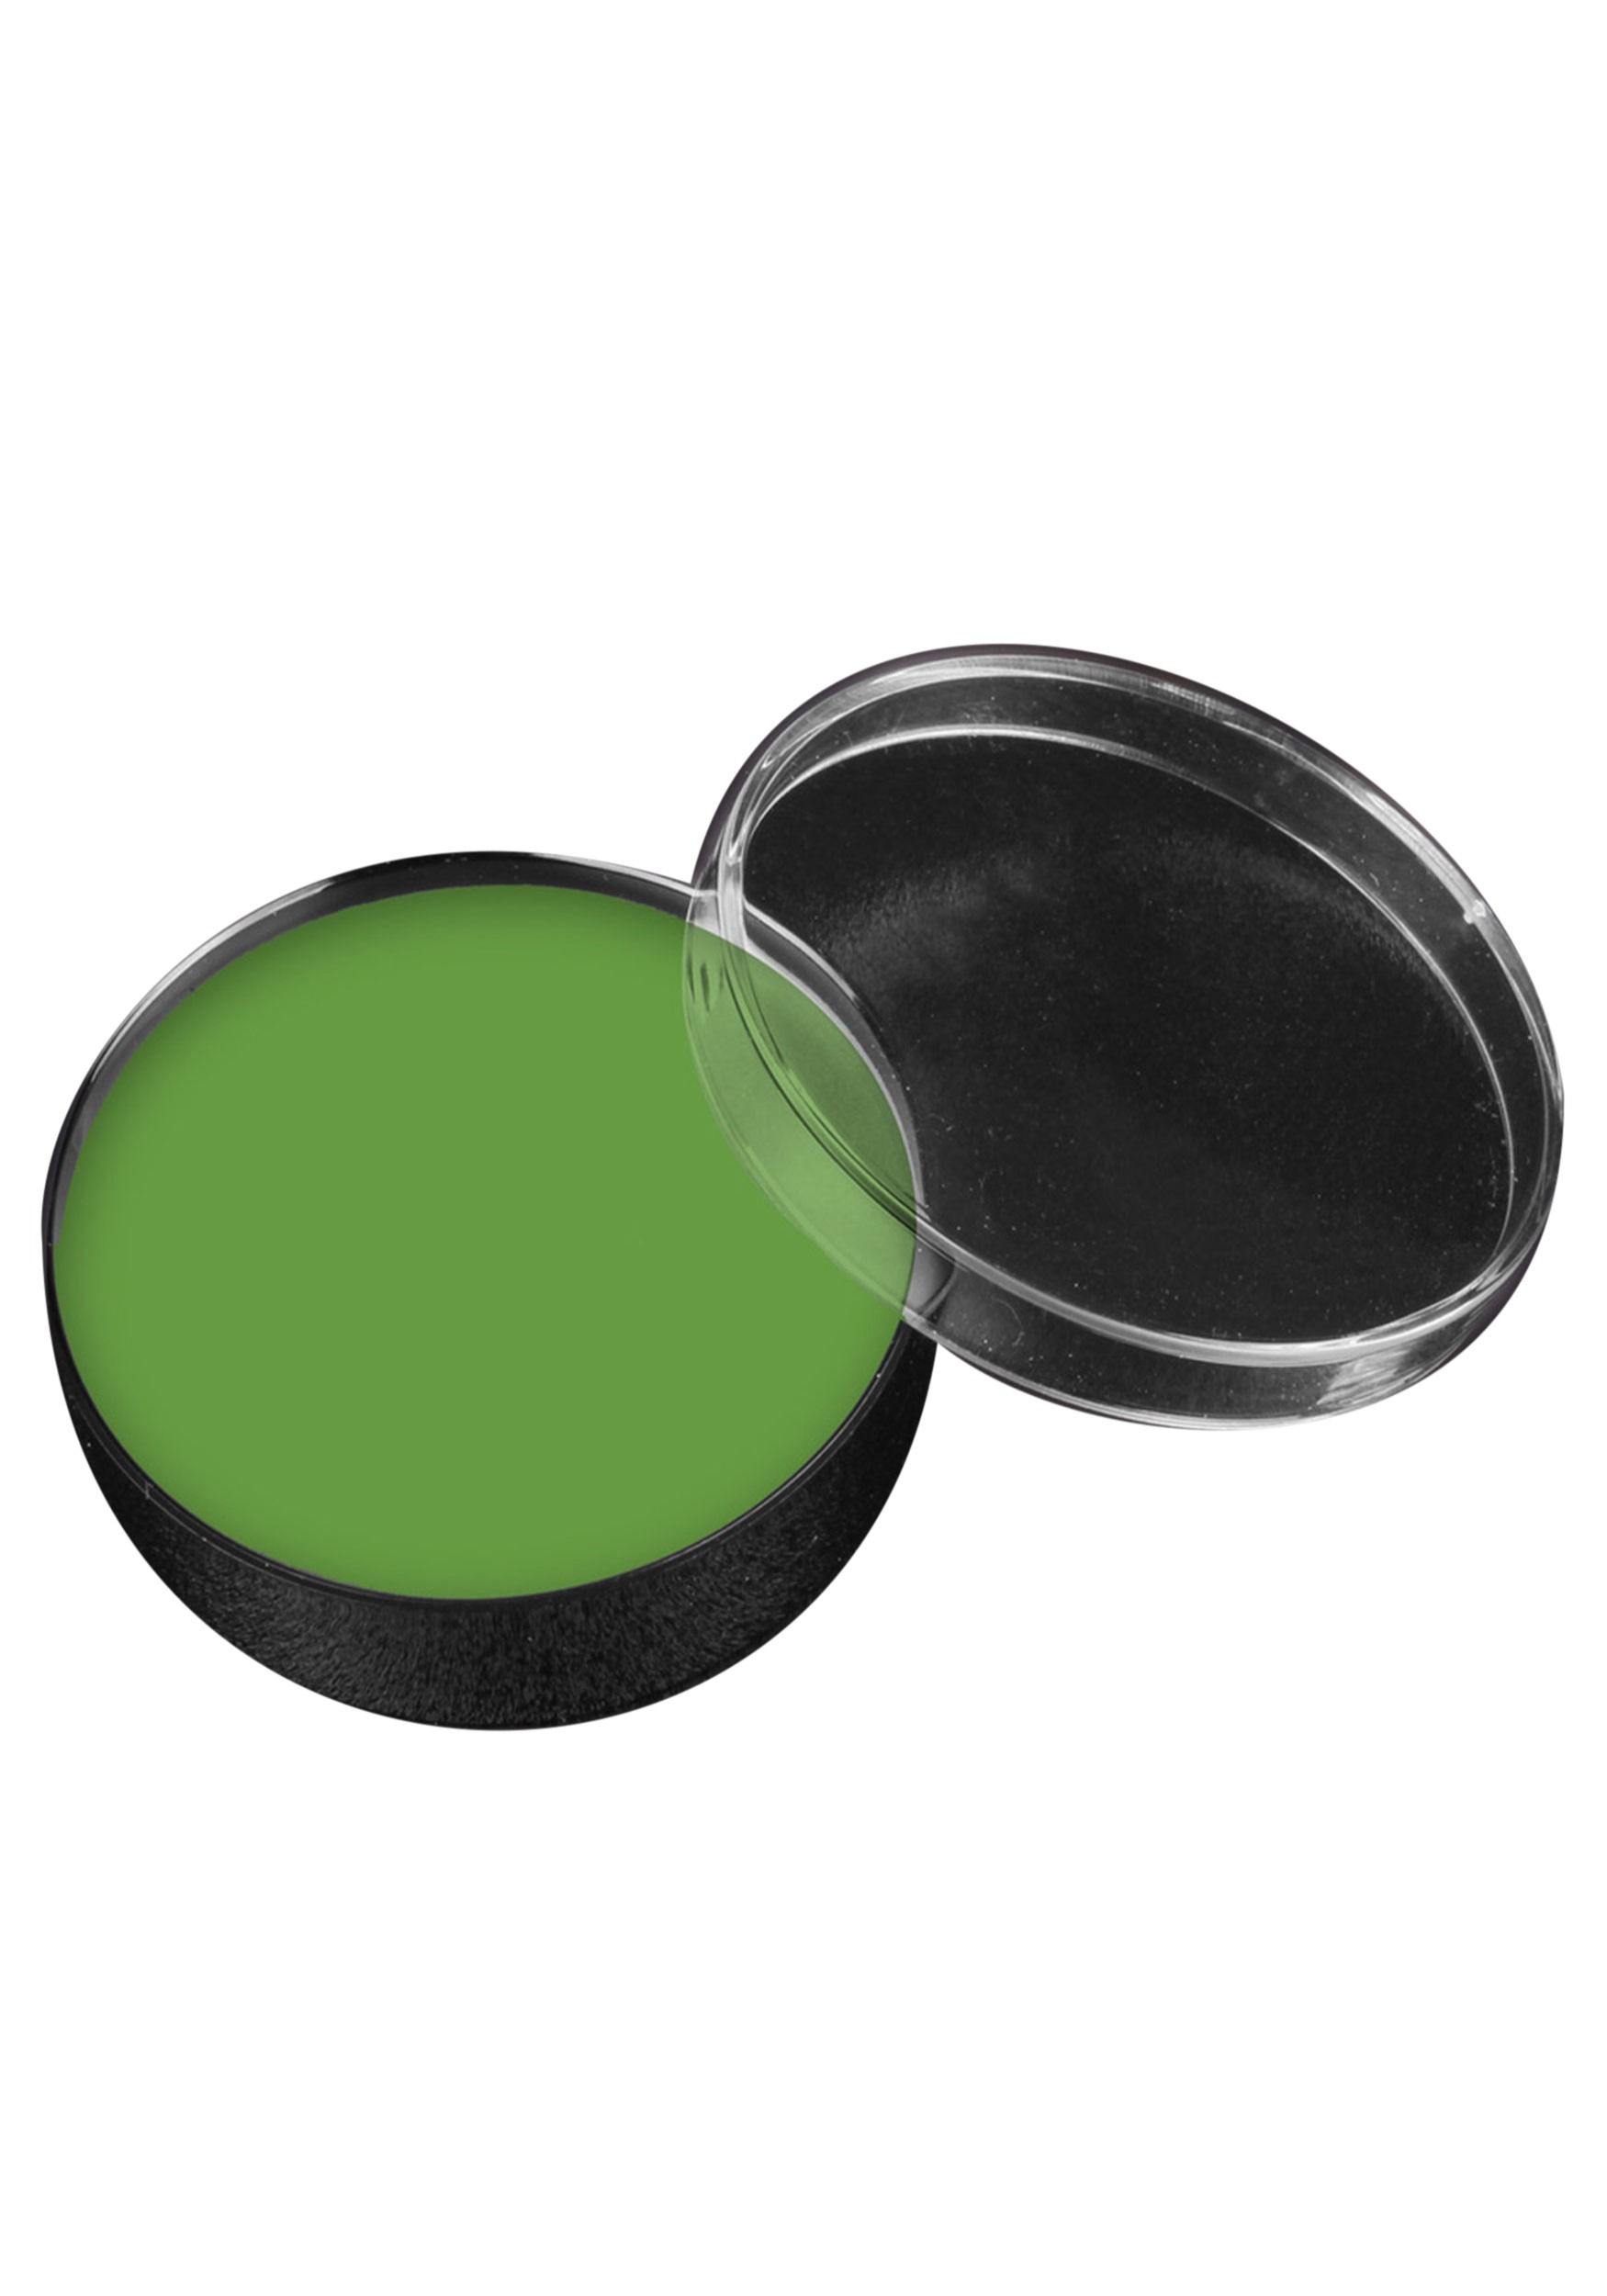 Mehron Premium Greasepaint Makeup 0.5 oz Green